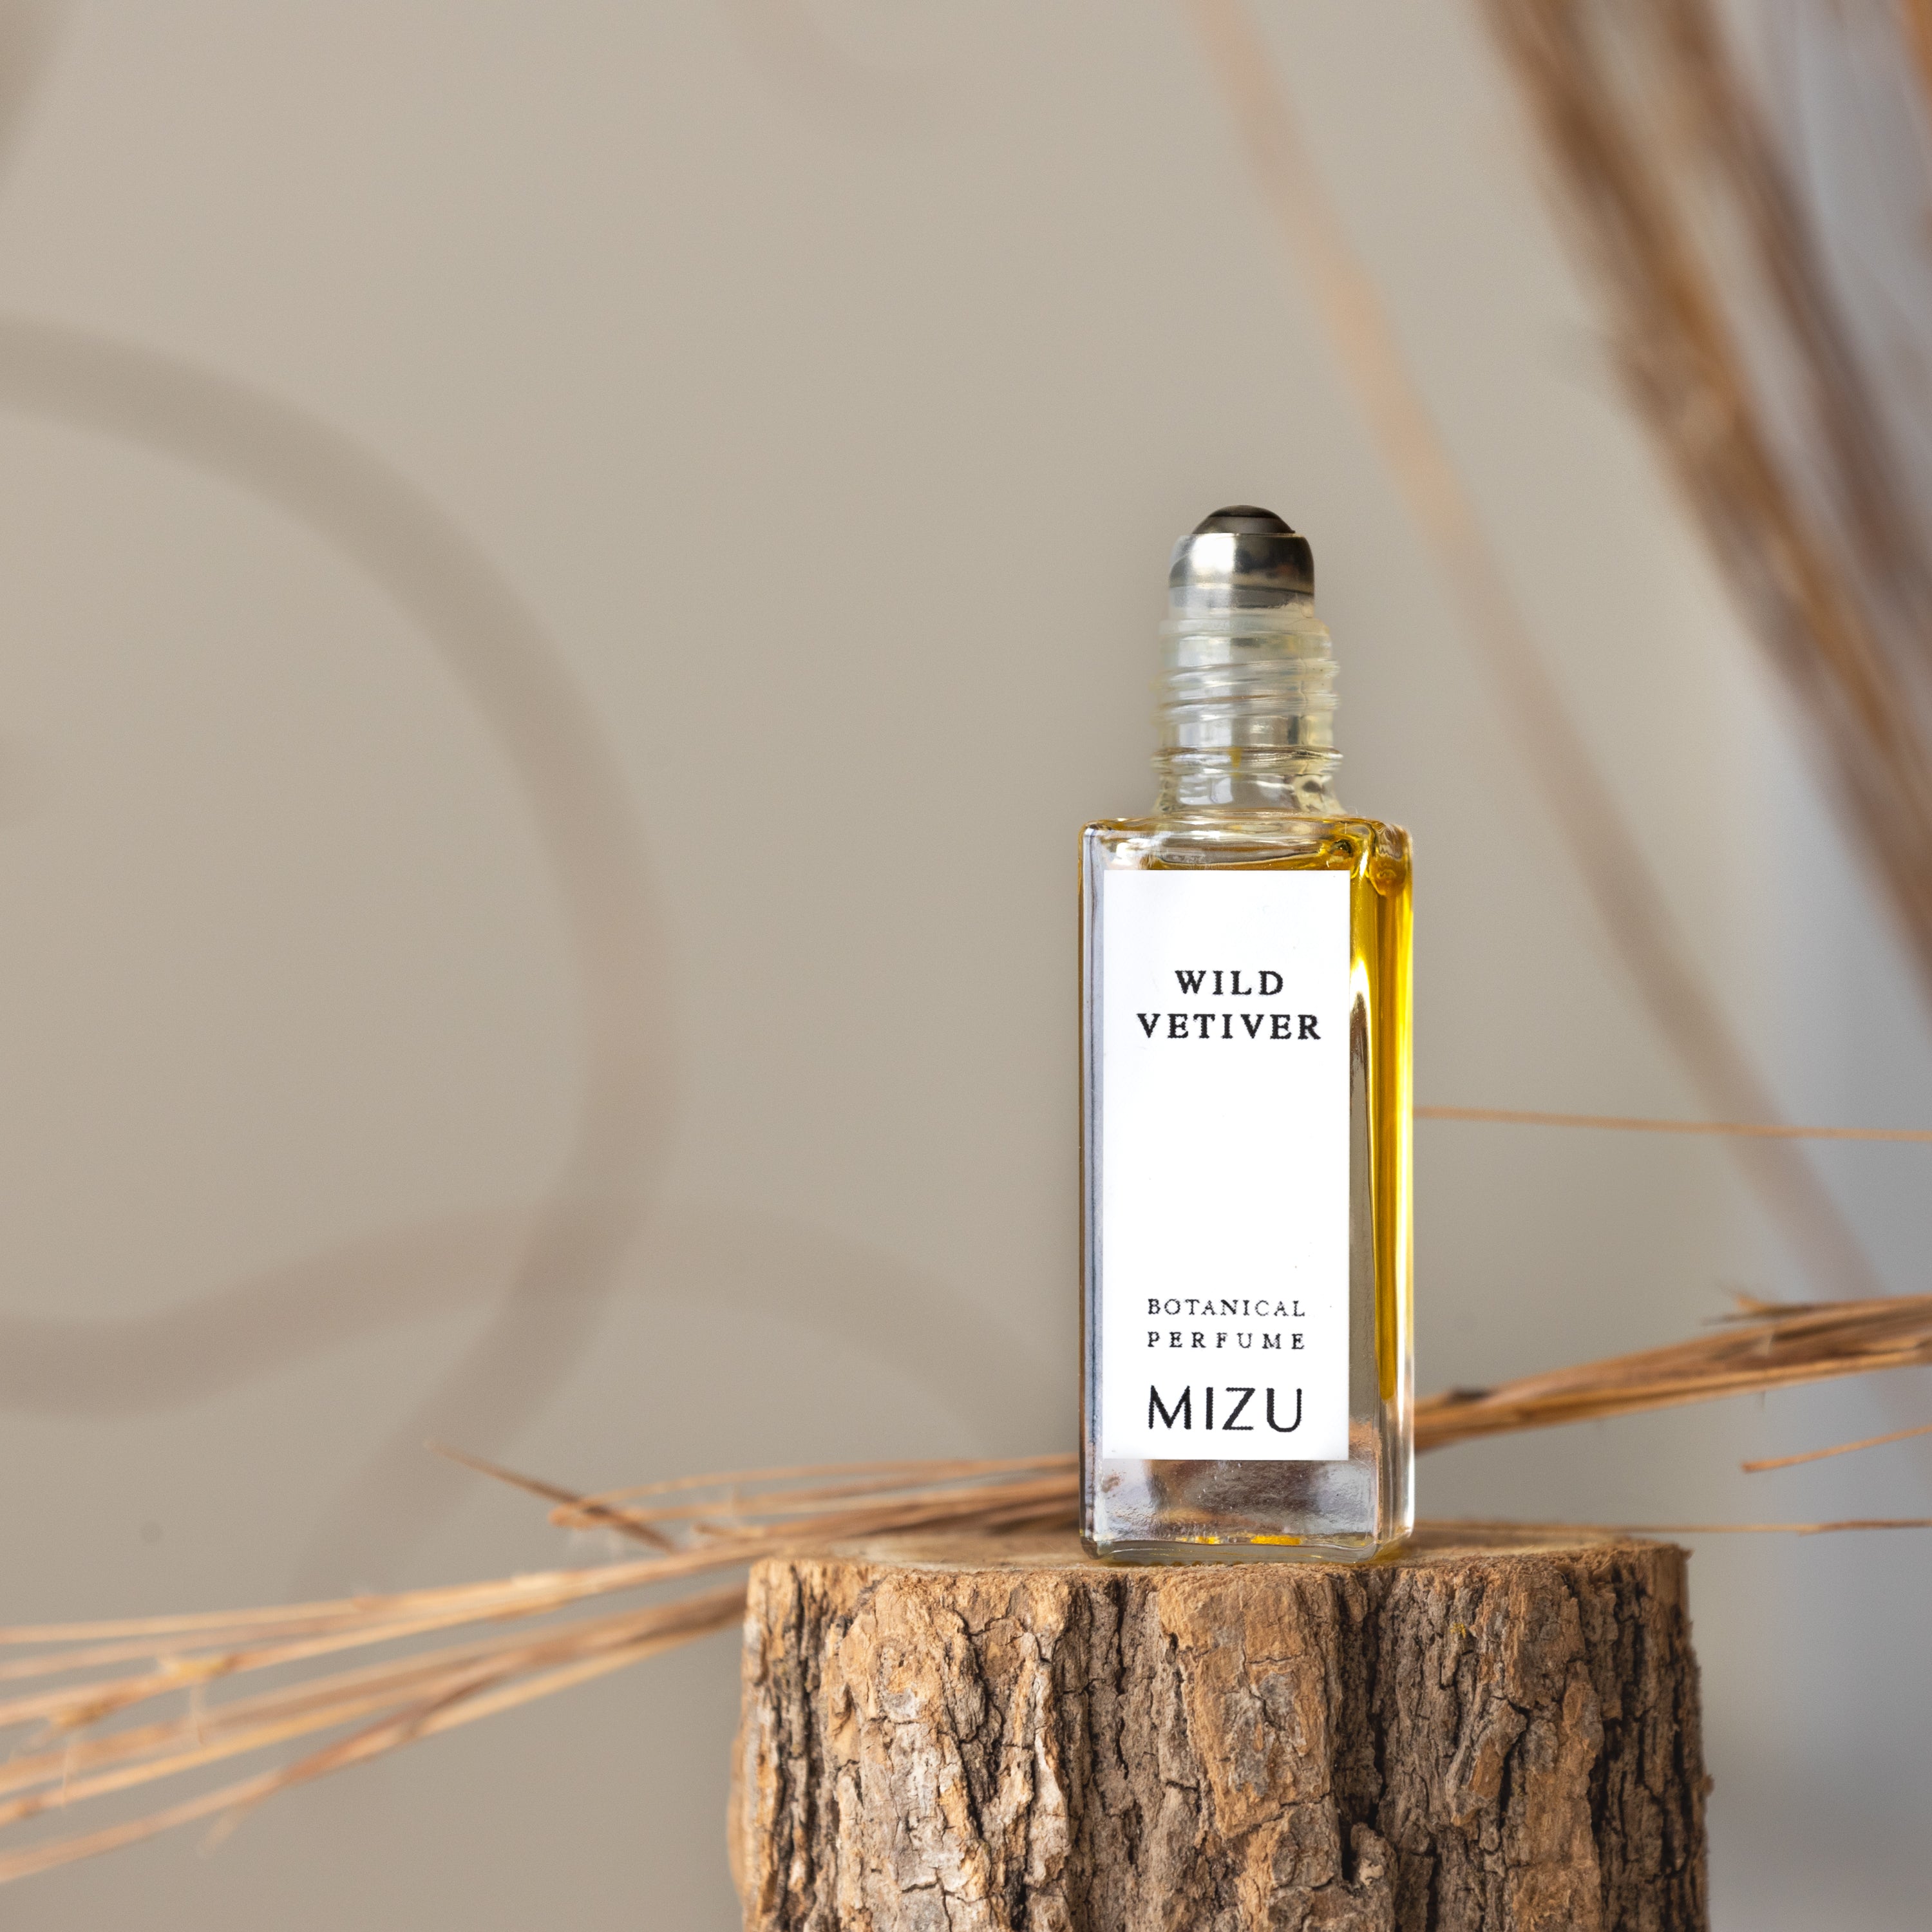 Mizu Wild Vetiver All Natural Botanical Perfume Oil